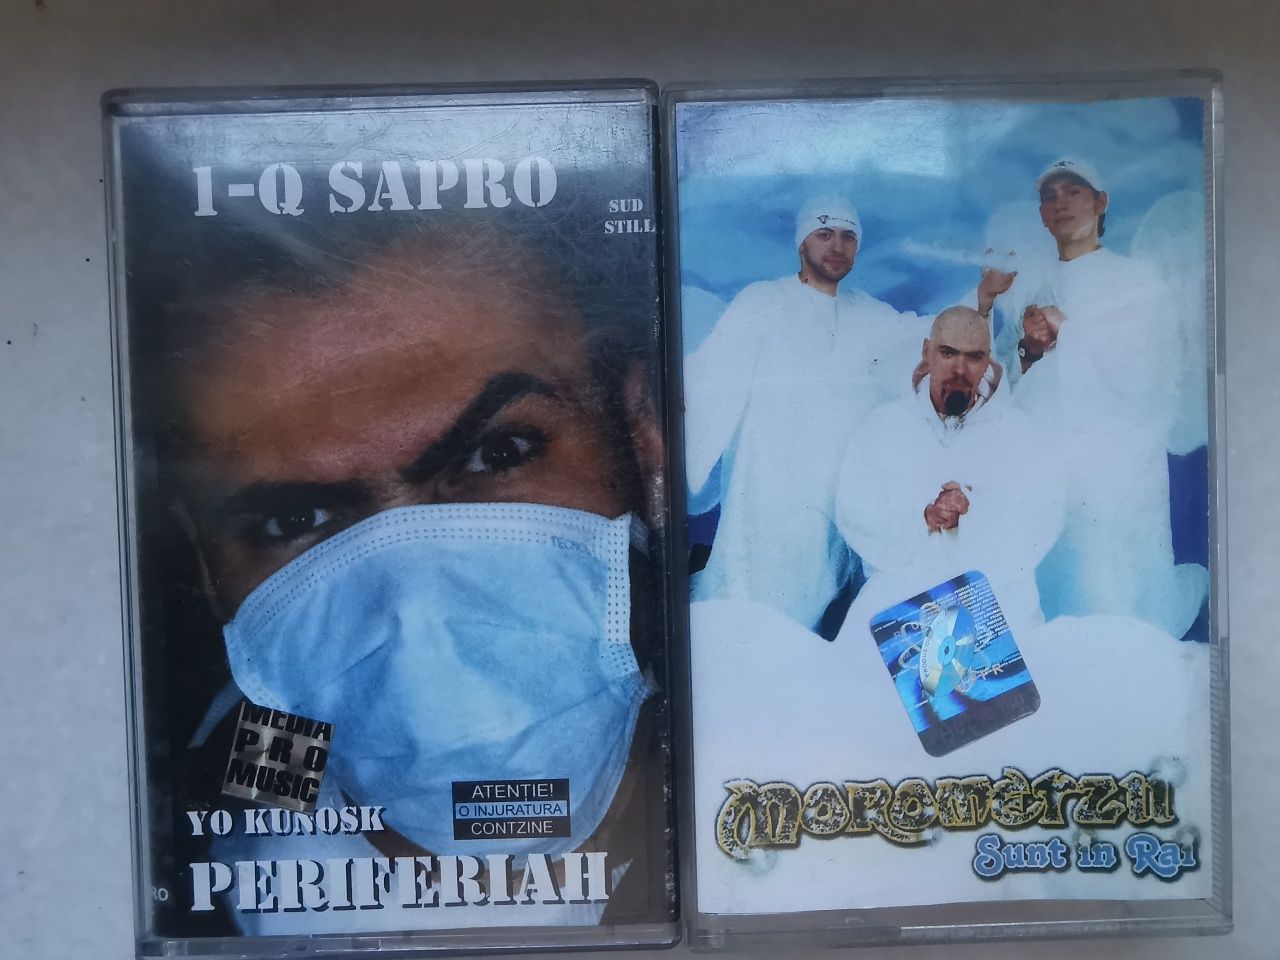 Caseta Hip Hop 1-Q SAPRO - Morometzzi